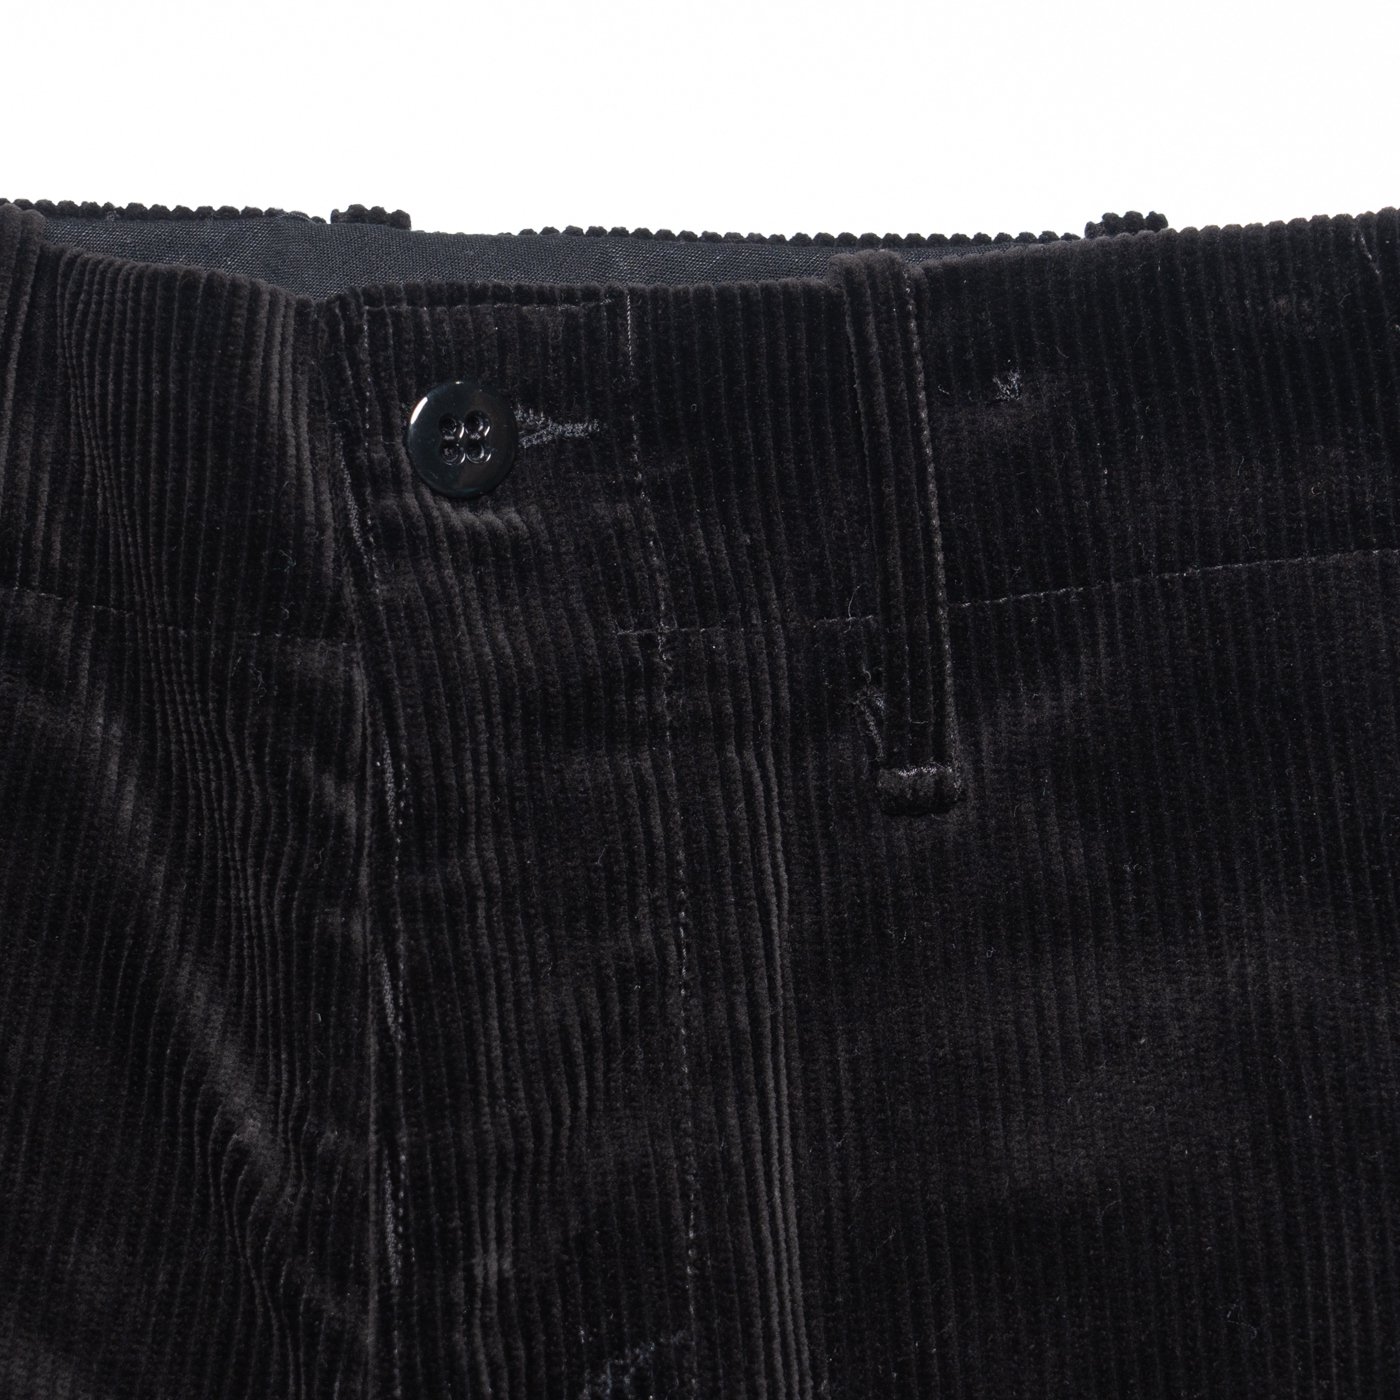 TUKI * 0168 Short Short Wide Trousers 8 Wale Corduroy * Black